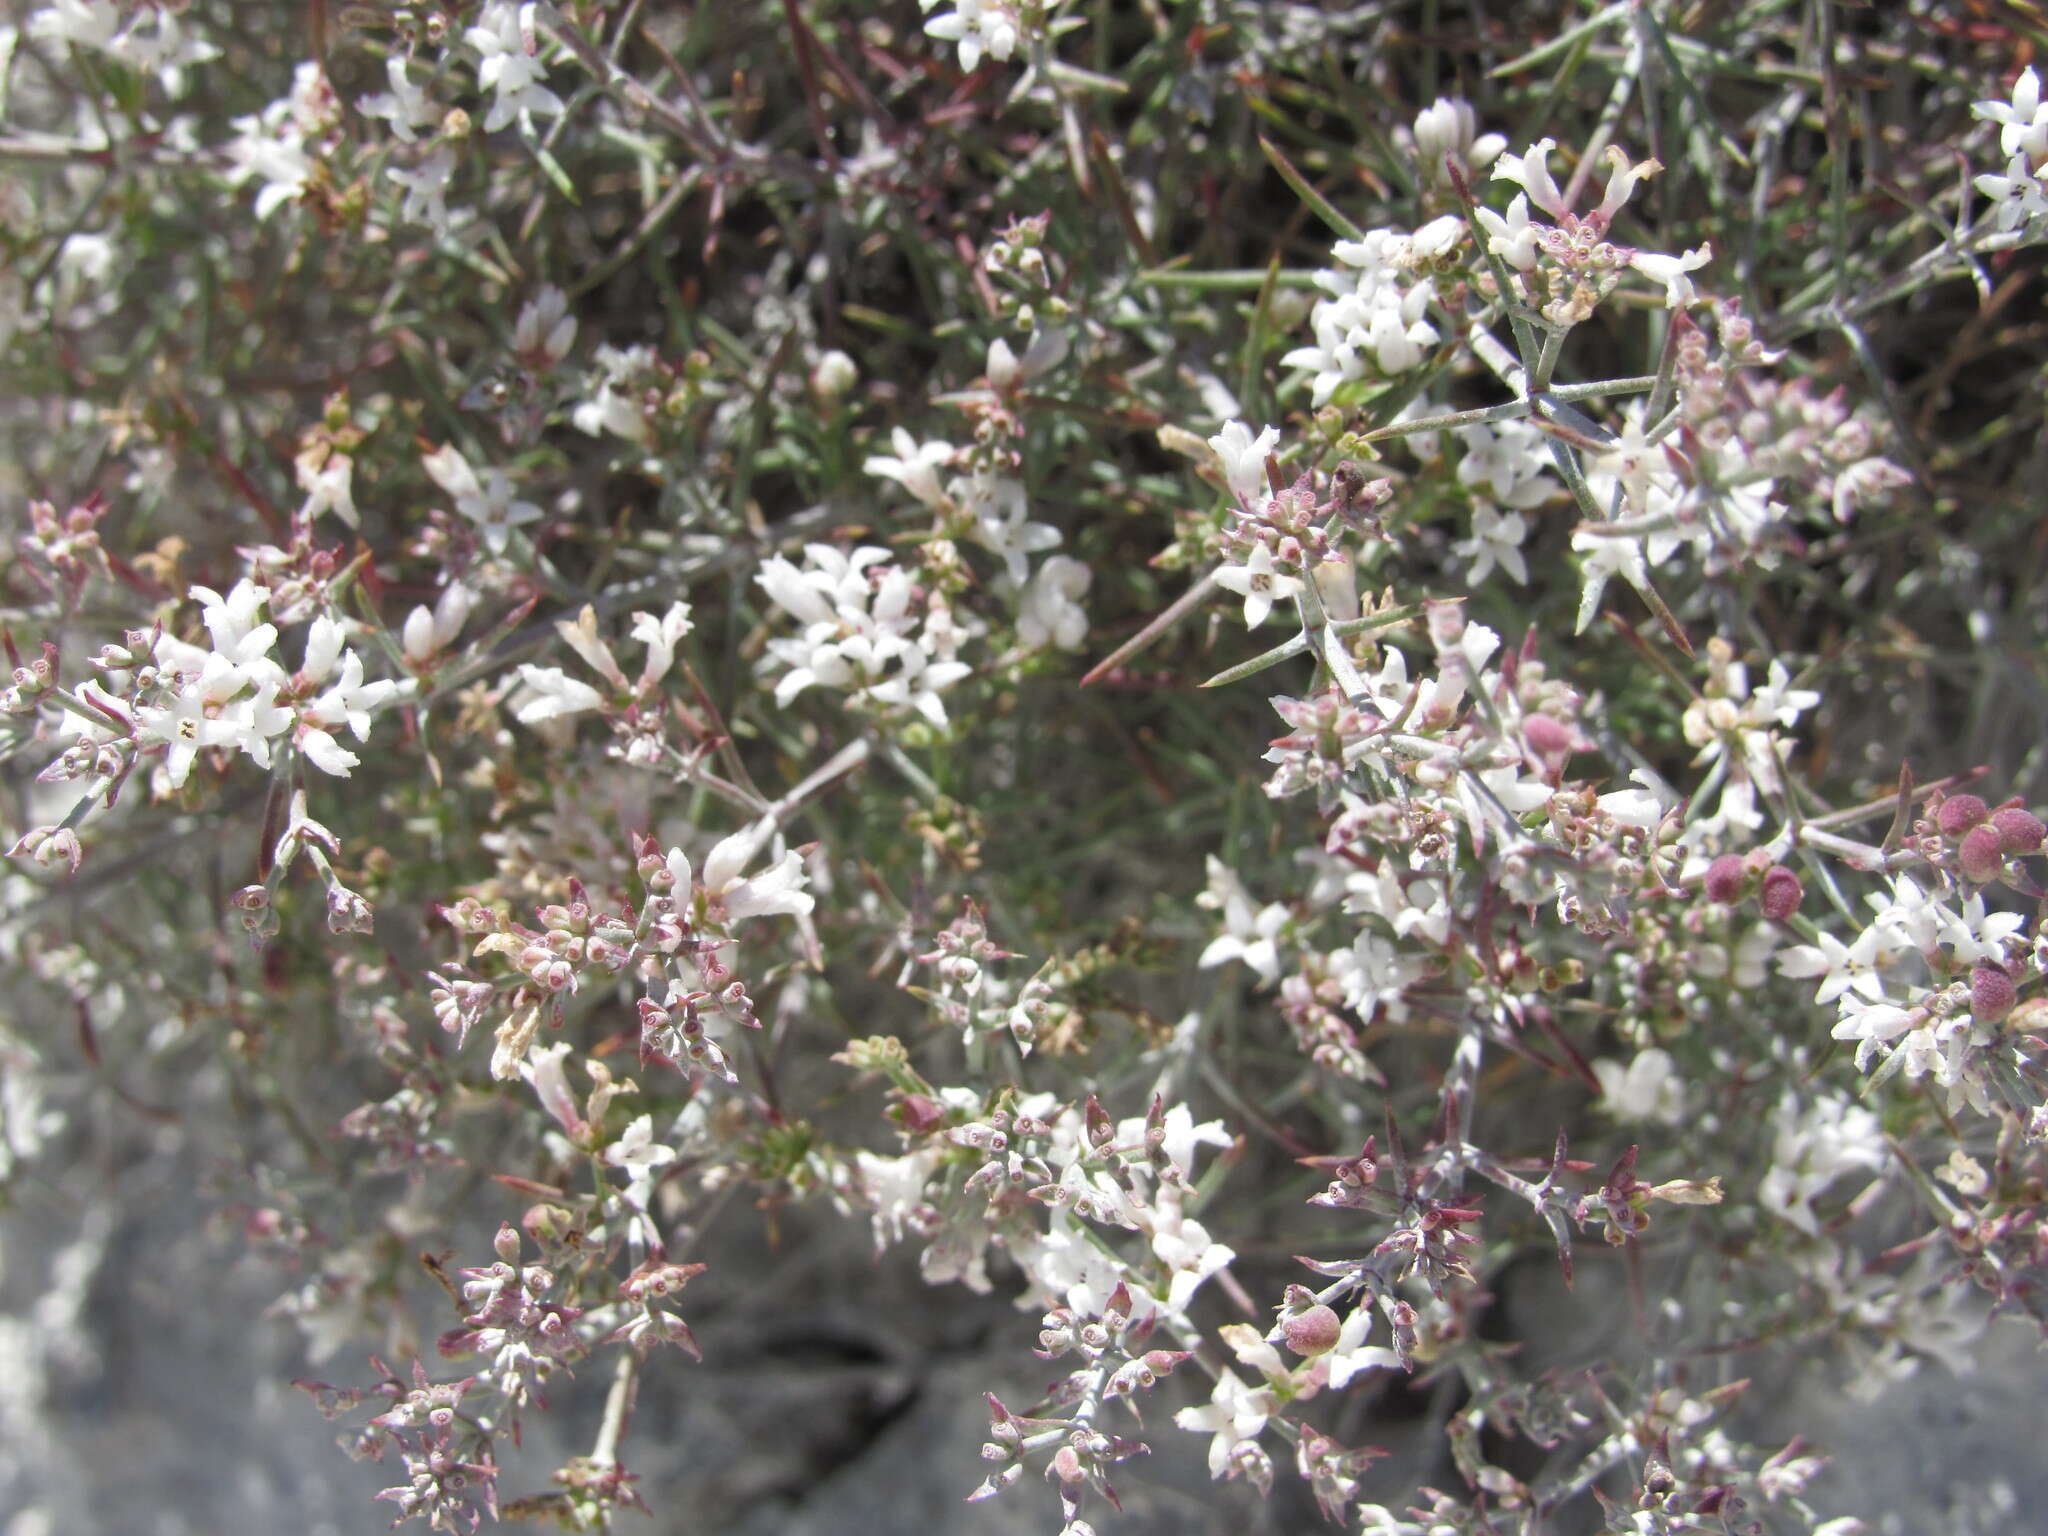 Image of Asperula tephrocarpa Czern. ex Popov & Chrshan.